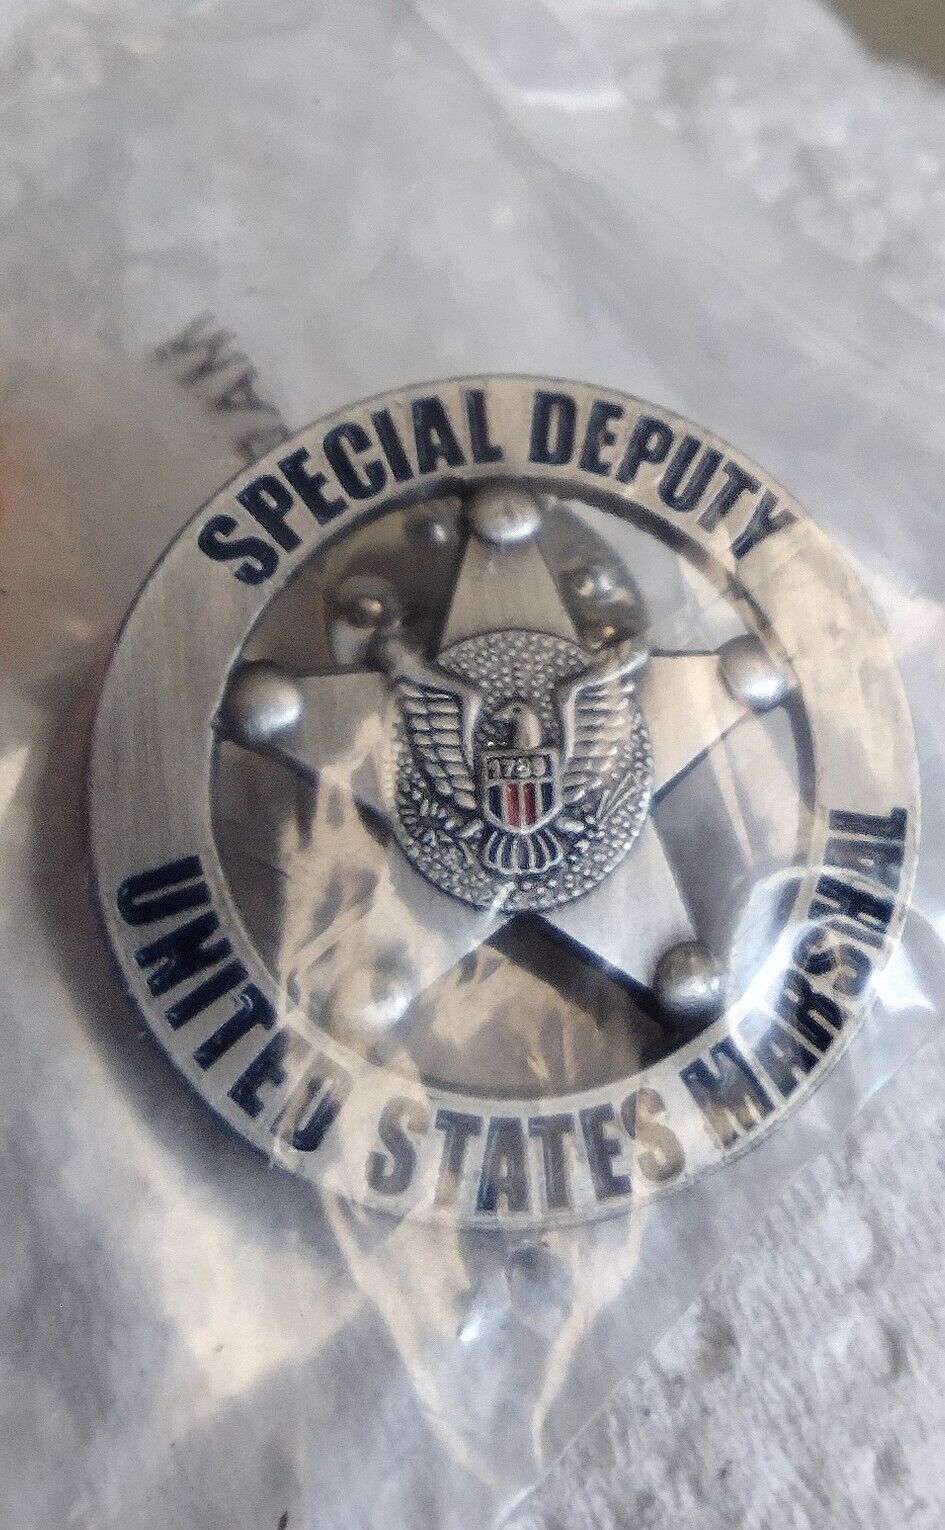 US Marshals Service “SPECIAL Deputy Gun Metal lapel Pin